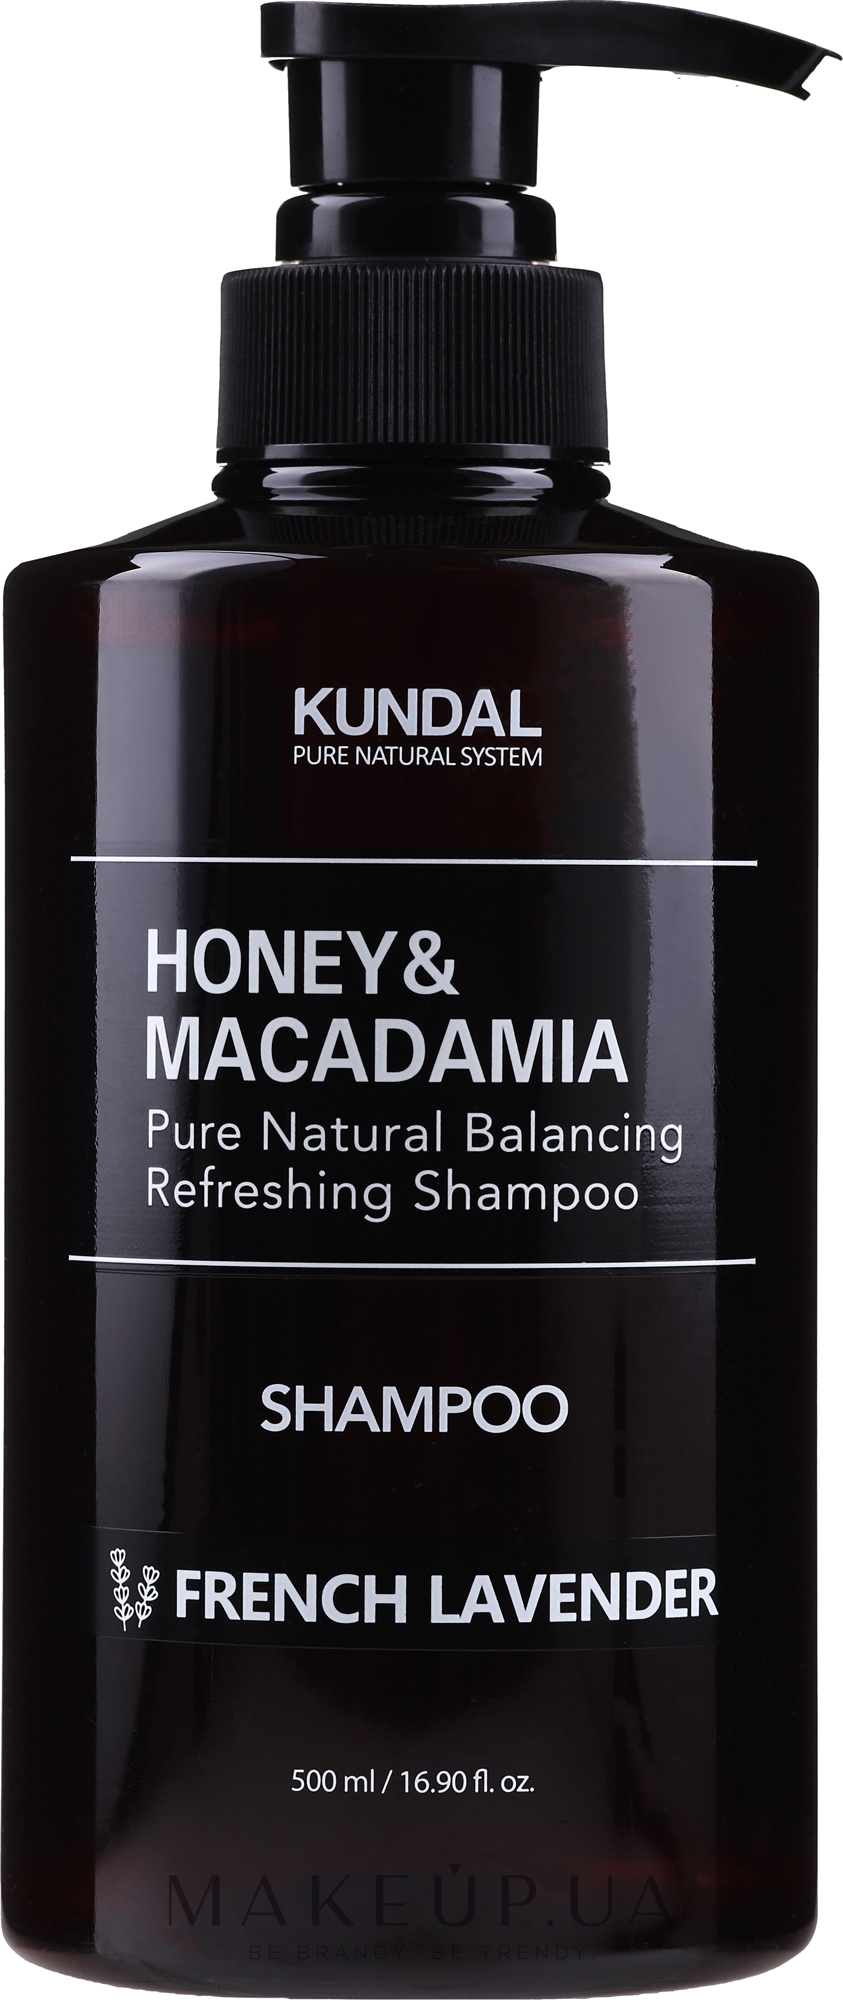 Шампунь для волос "Французская лаванда" - Kundal Honey & Macadamia Shampoo French Lavender — фото 500ml